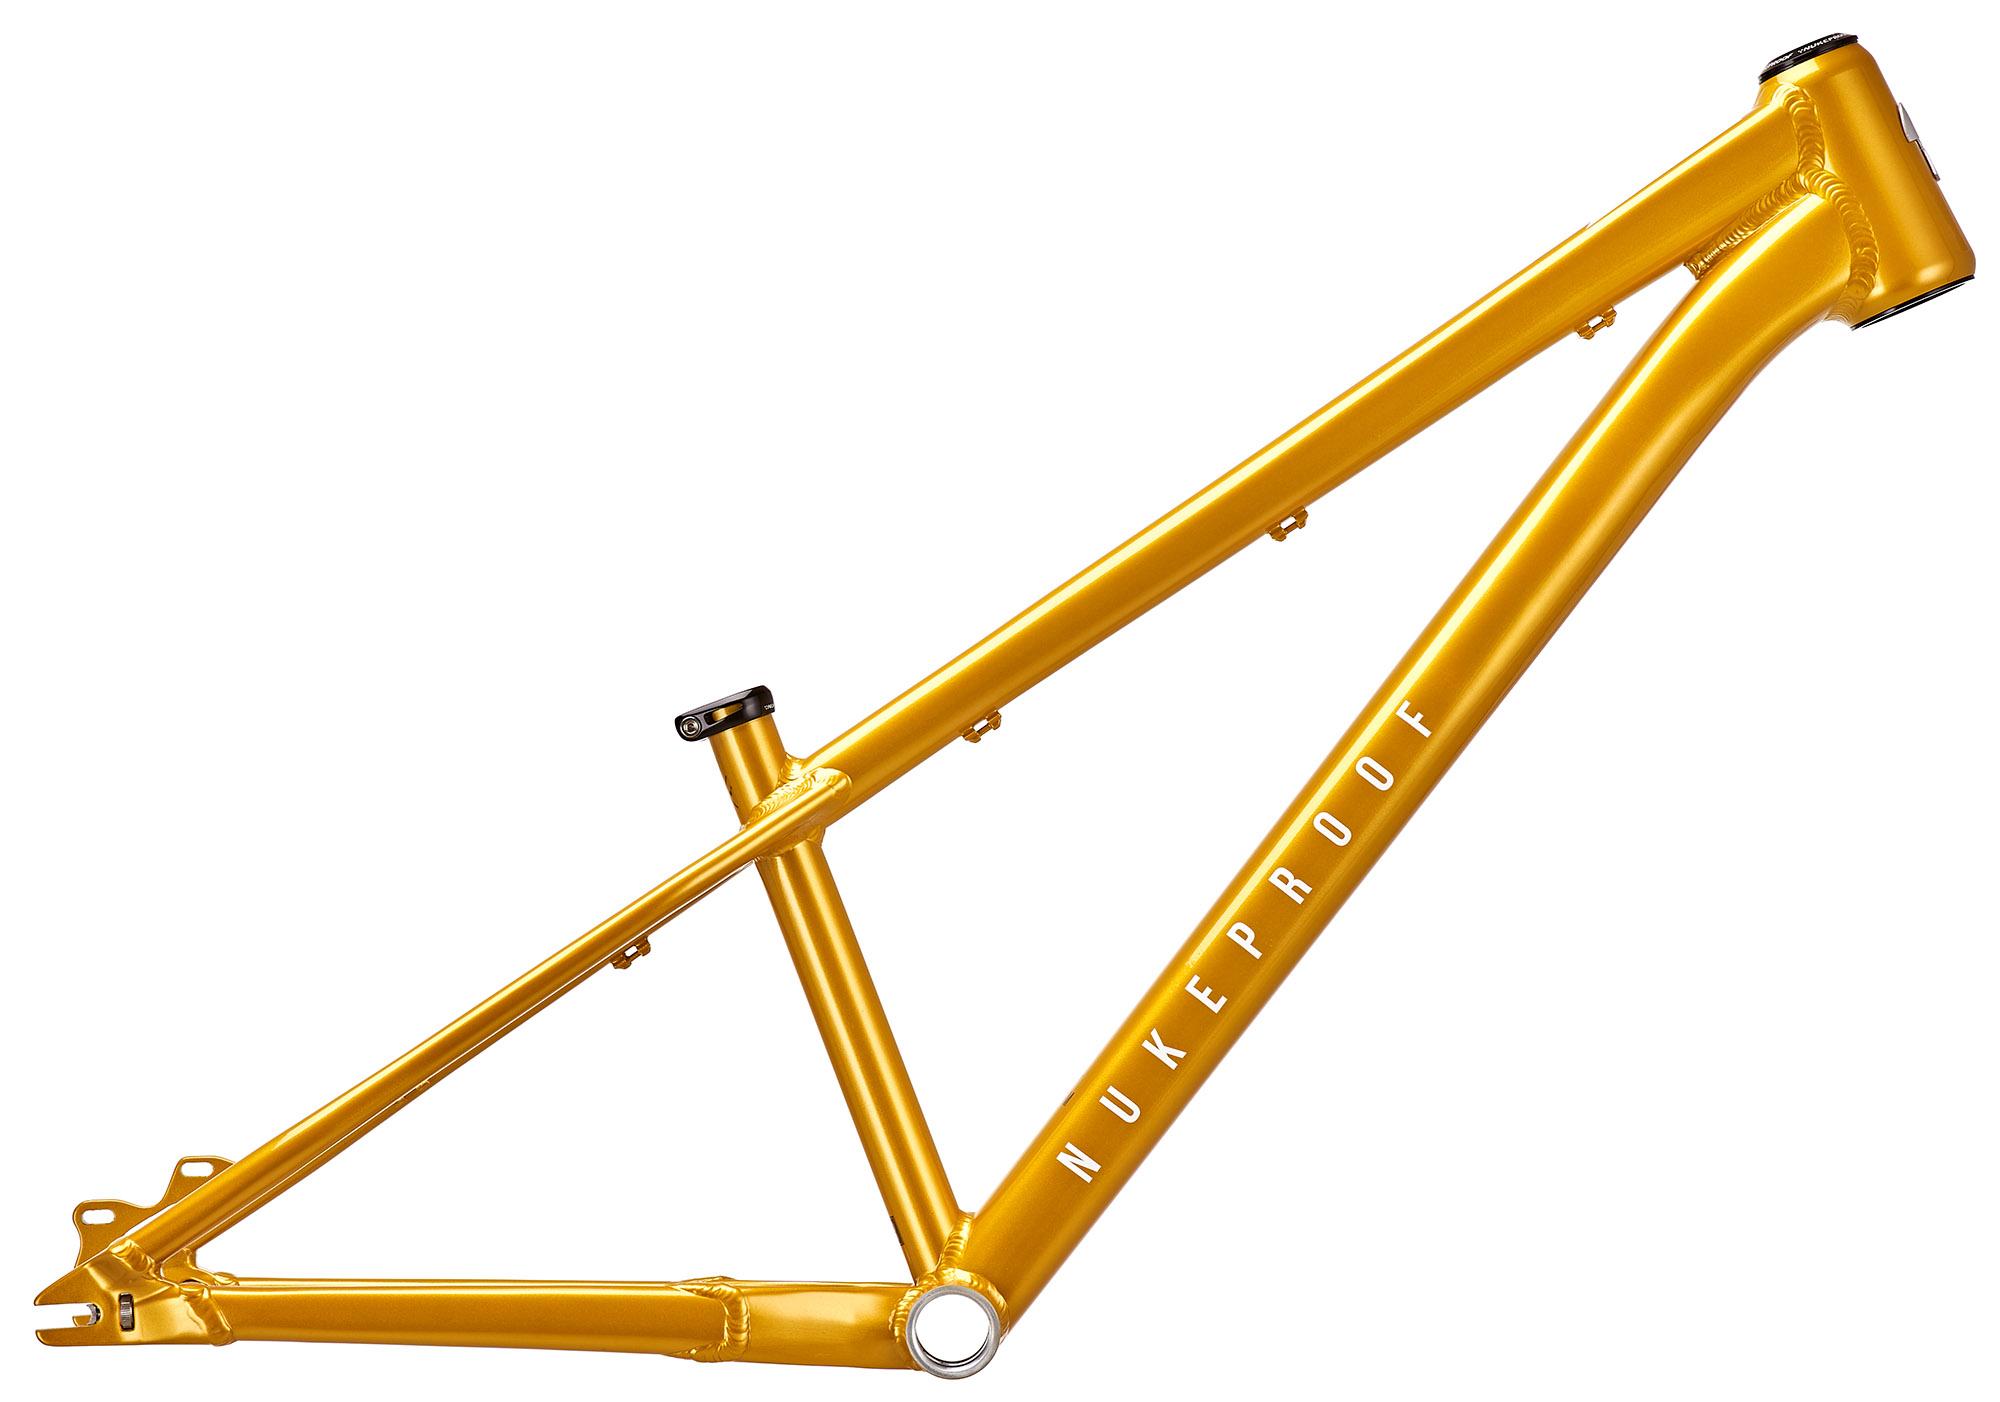 Nukeproof Solum 260 Alloy Mountain Bike Frame - Turmeric Yellow